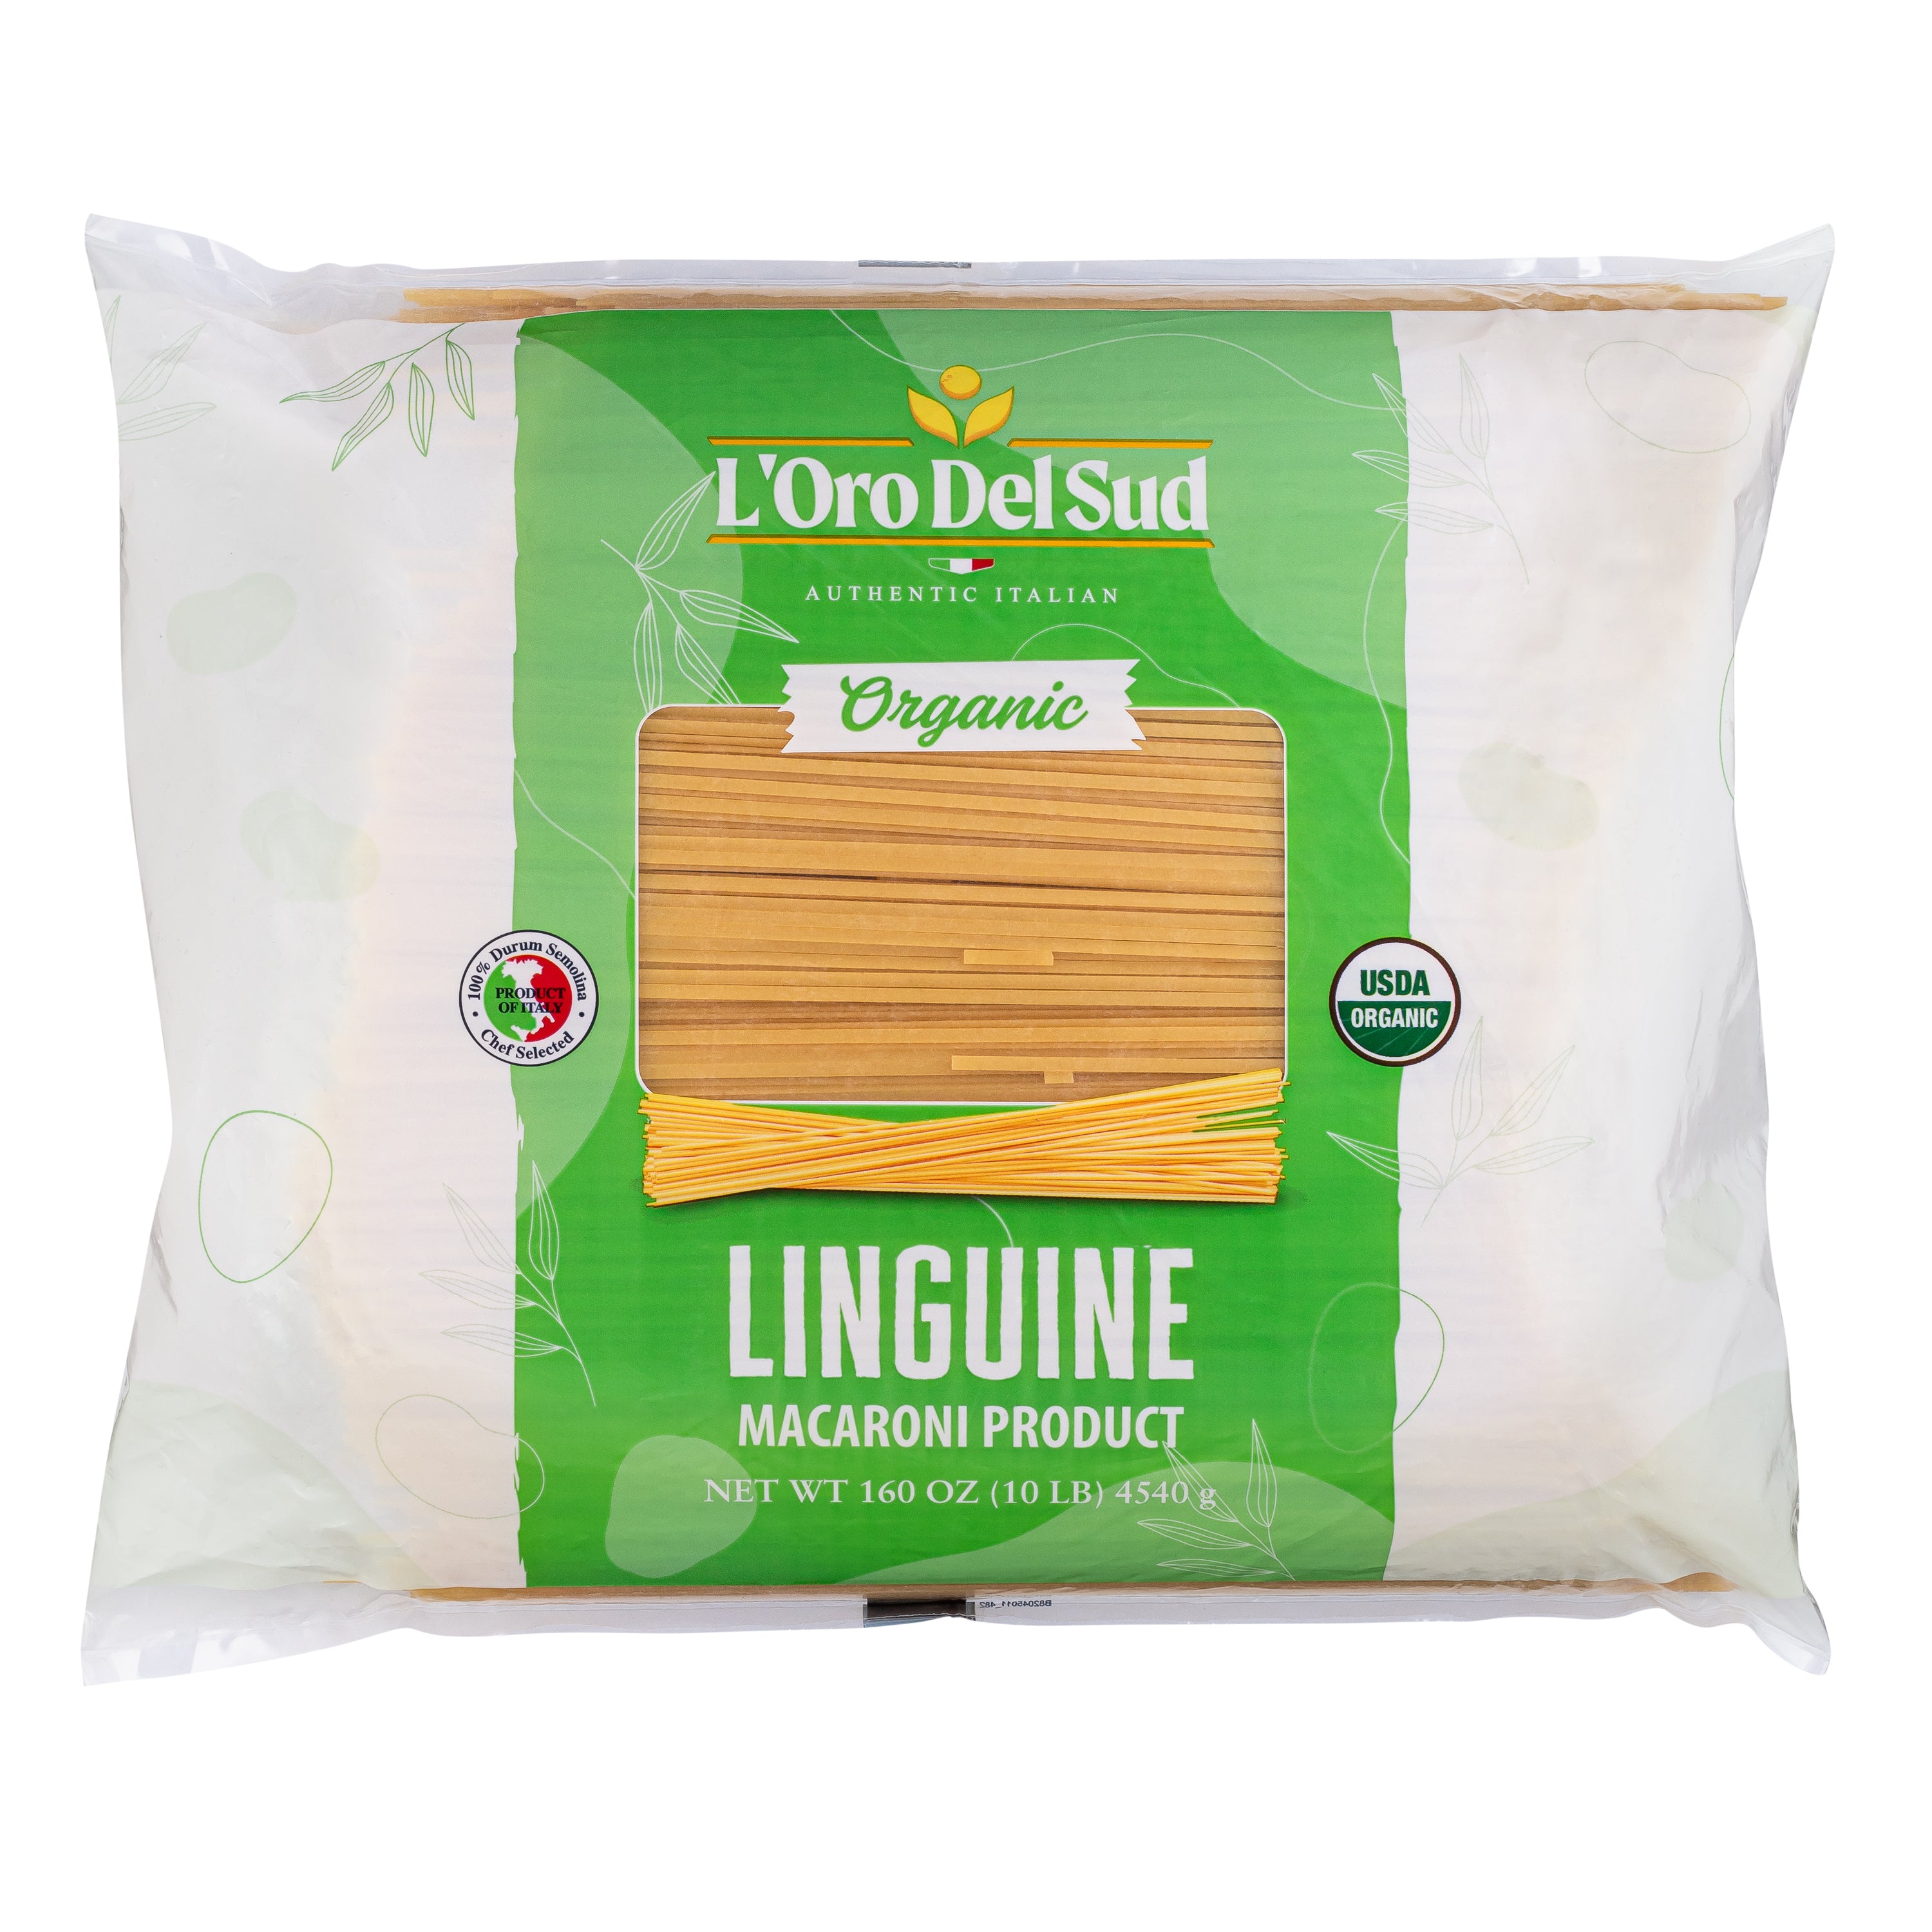 L'Oro Del Sud Linguine Pasta - 10lb Bag (Organic)